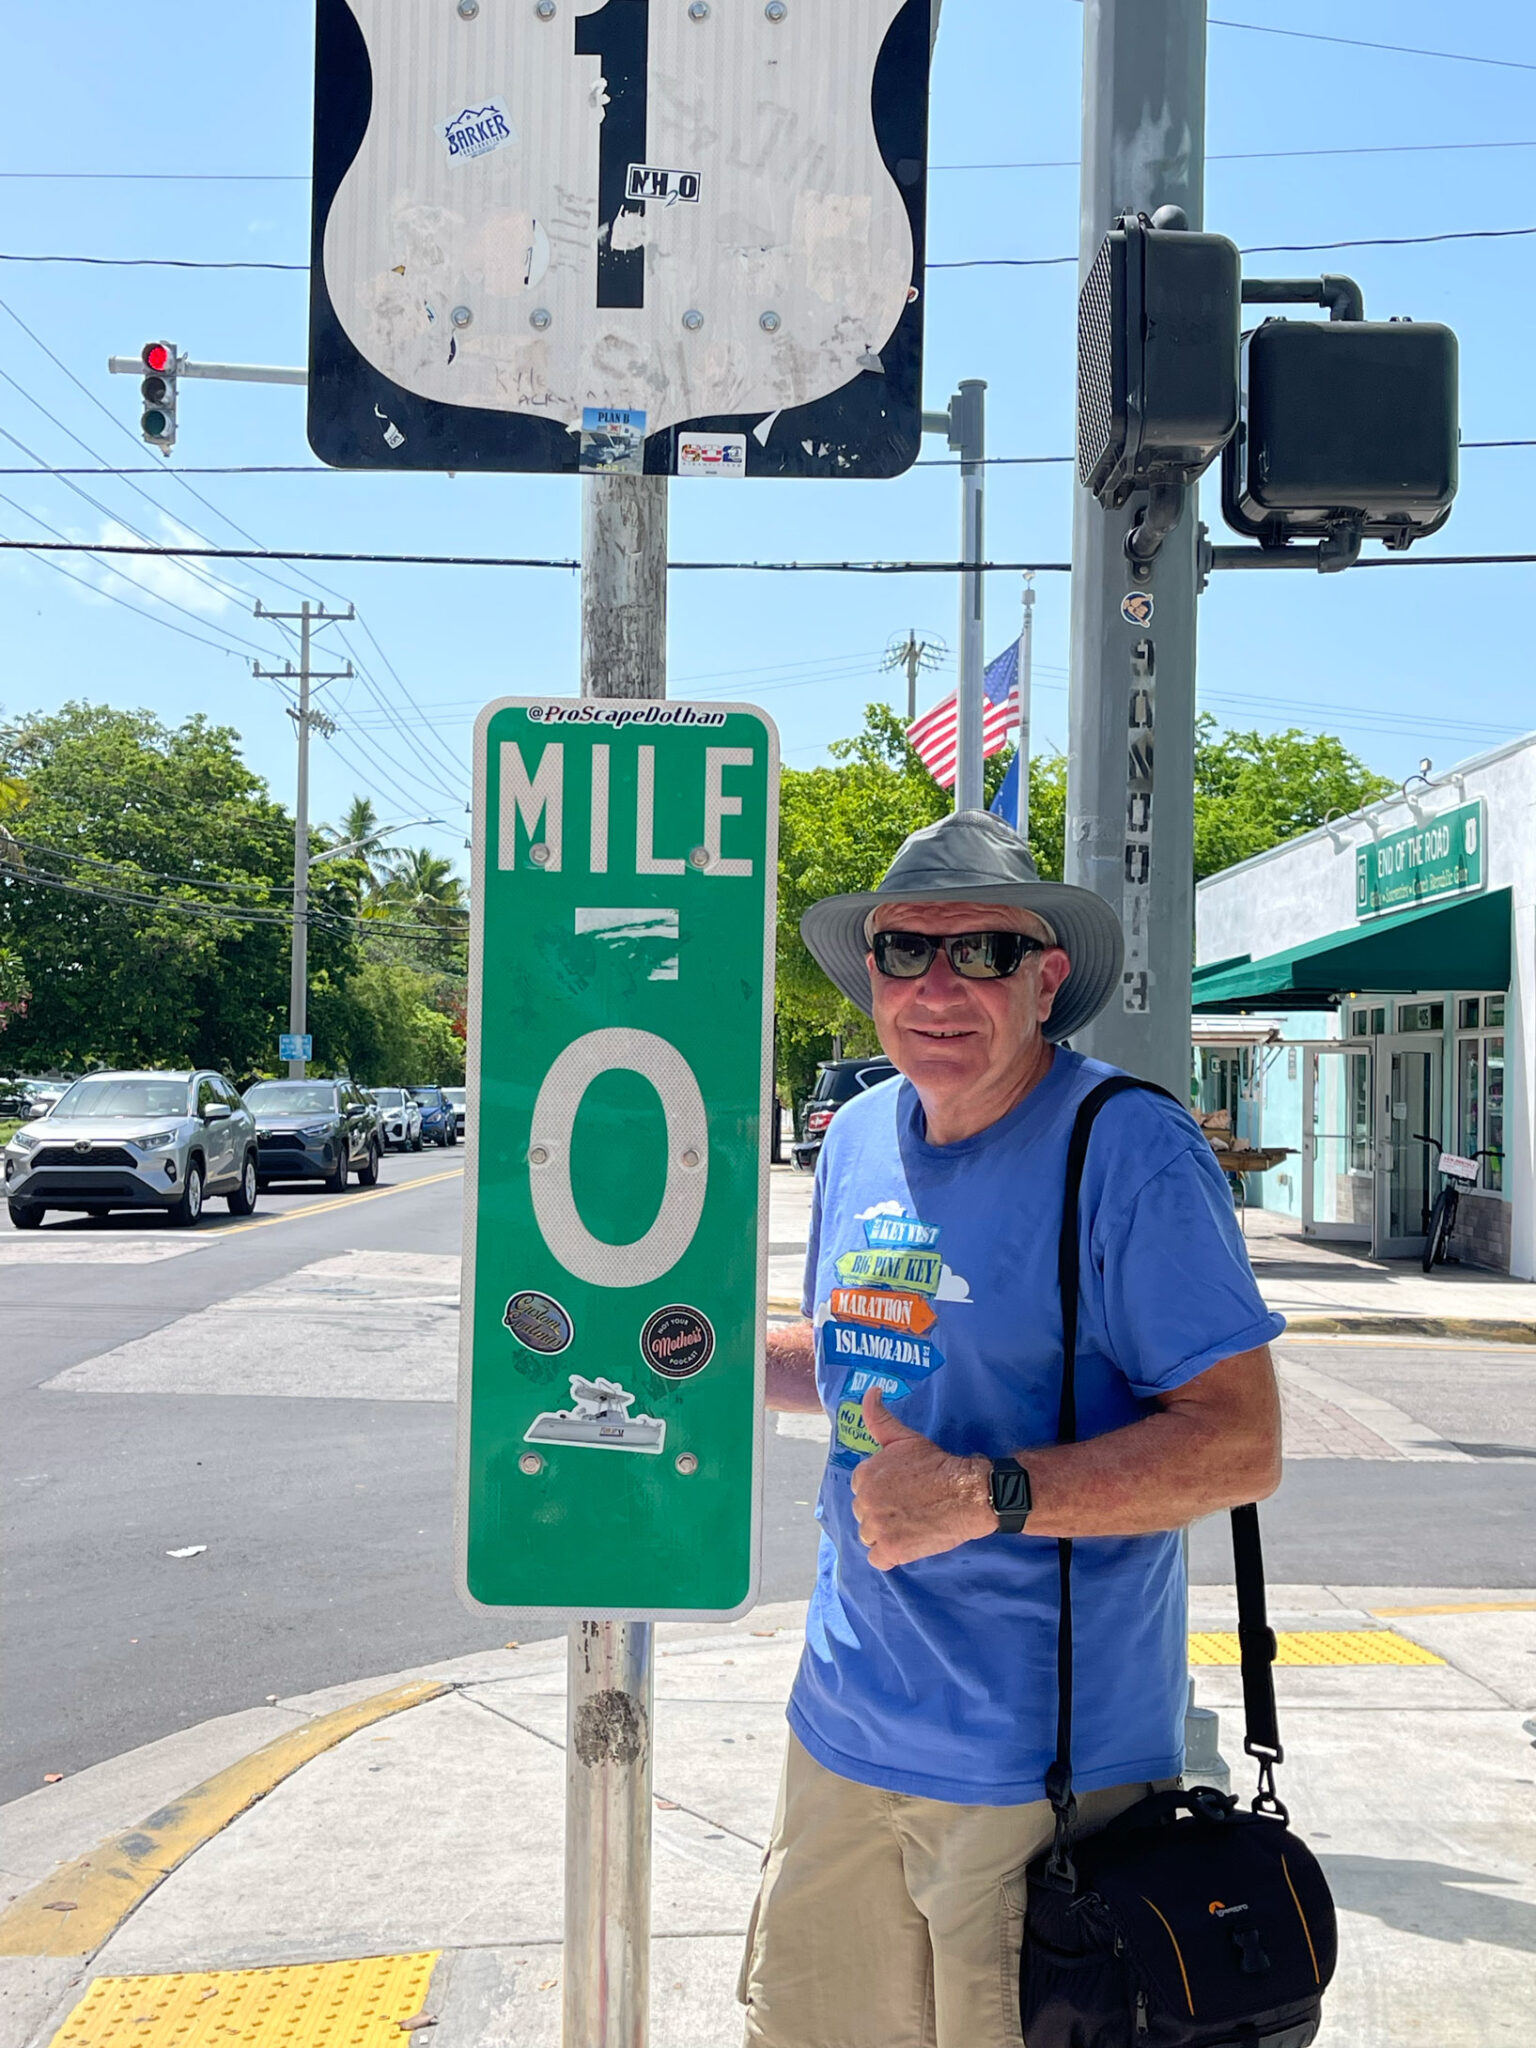 mile zero sign in key west